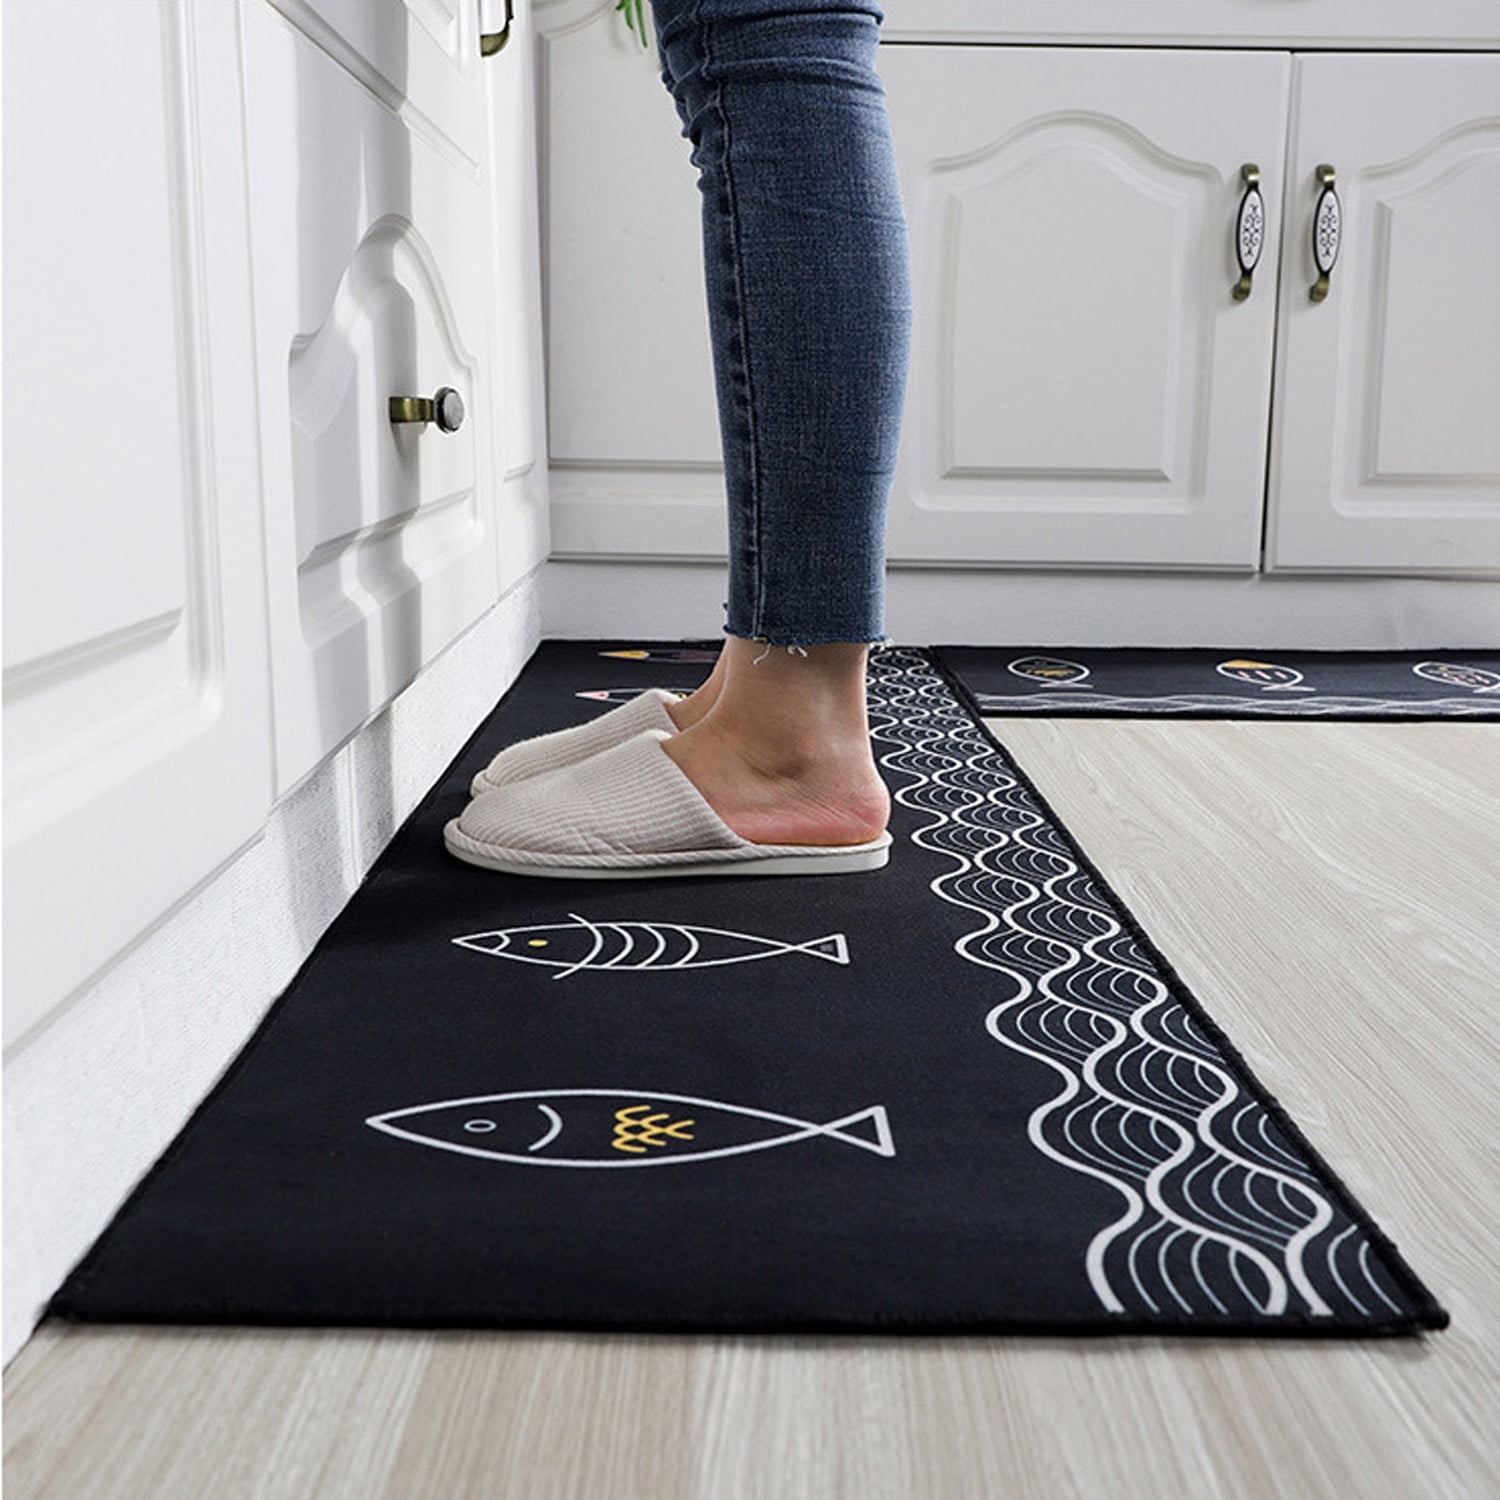 Chef Pattern Kitchen Floor Rugs Carpet Blanket Area Mats Home Supply 40x60cm 